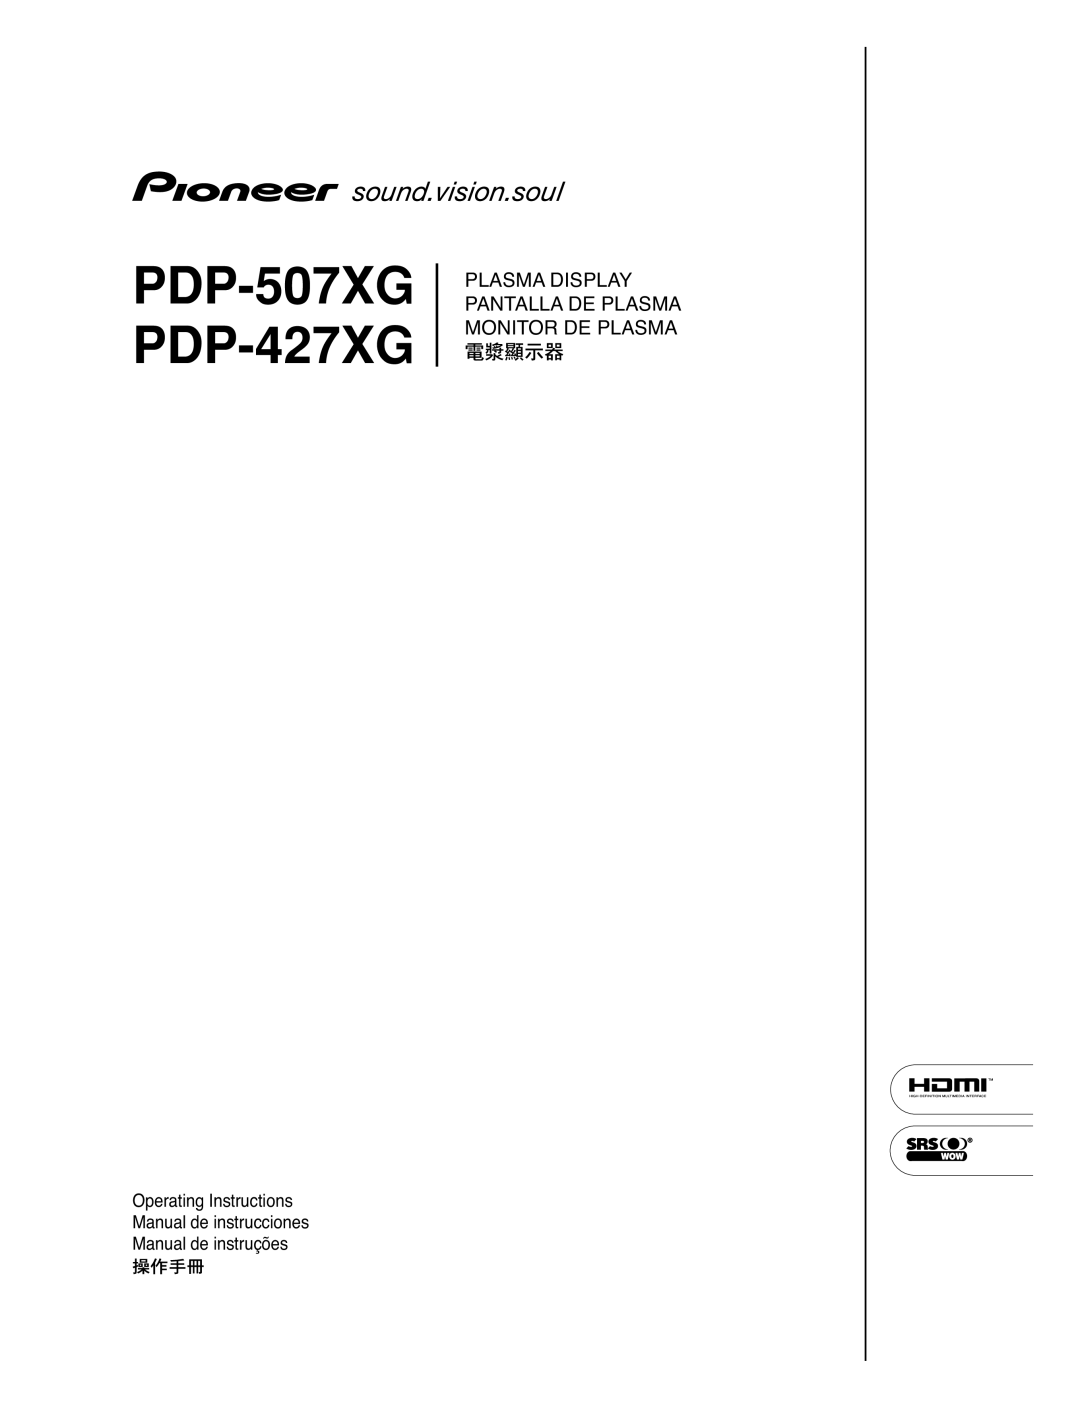 Pioneer manual Operating Instructions Manual de instrucciones Manual de instruções, PDP-507XG PDP-427XG 